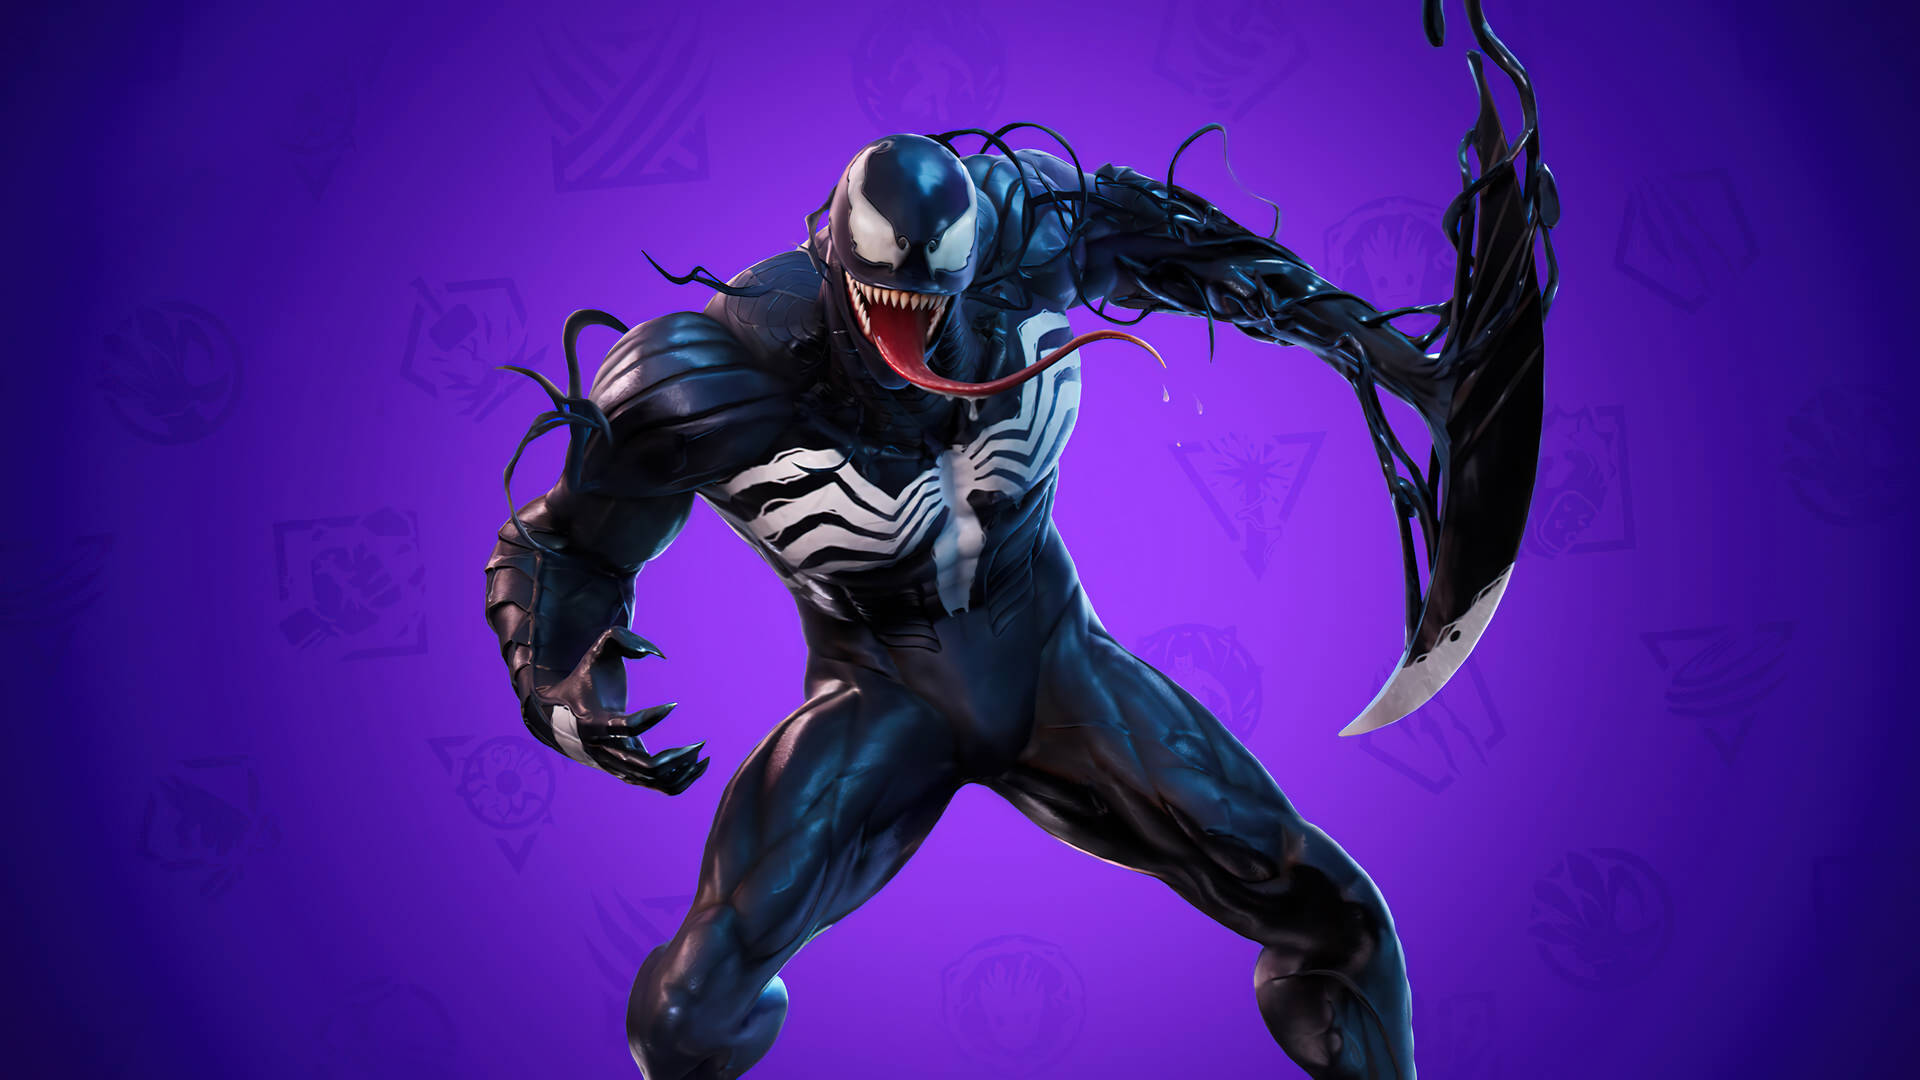 4k Ultra Hd Venom With Axe Arm